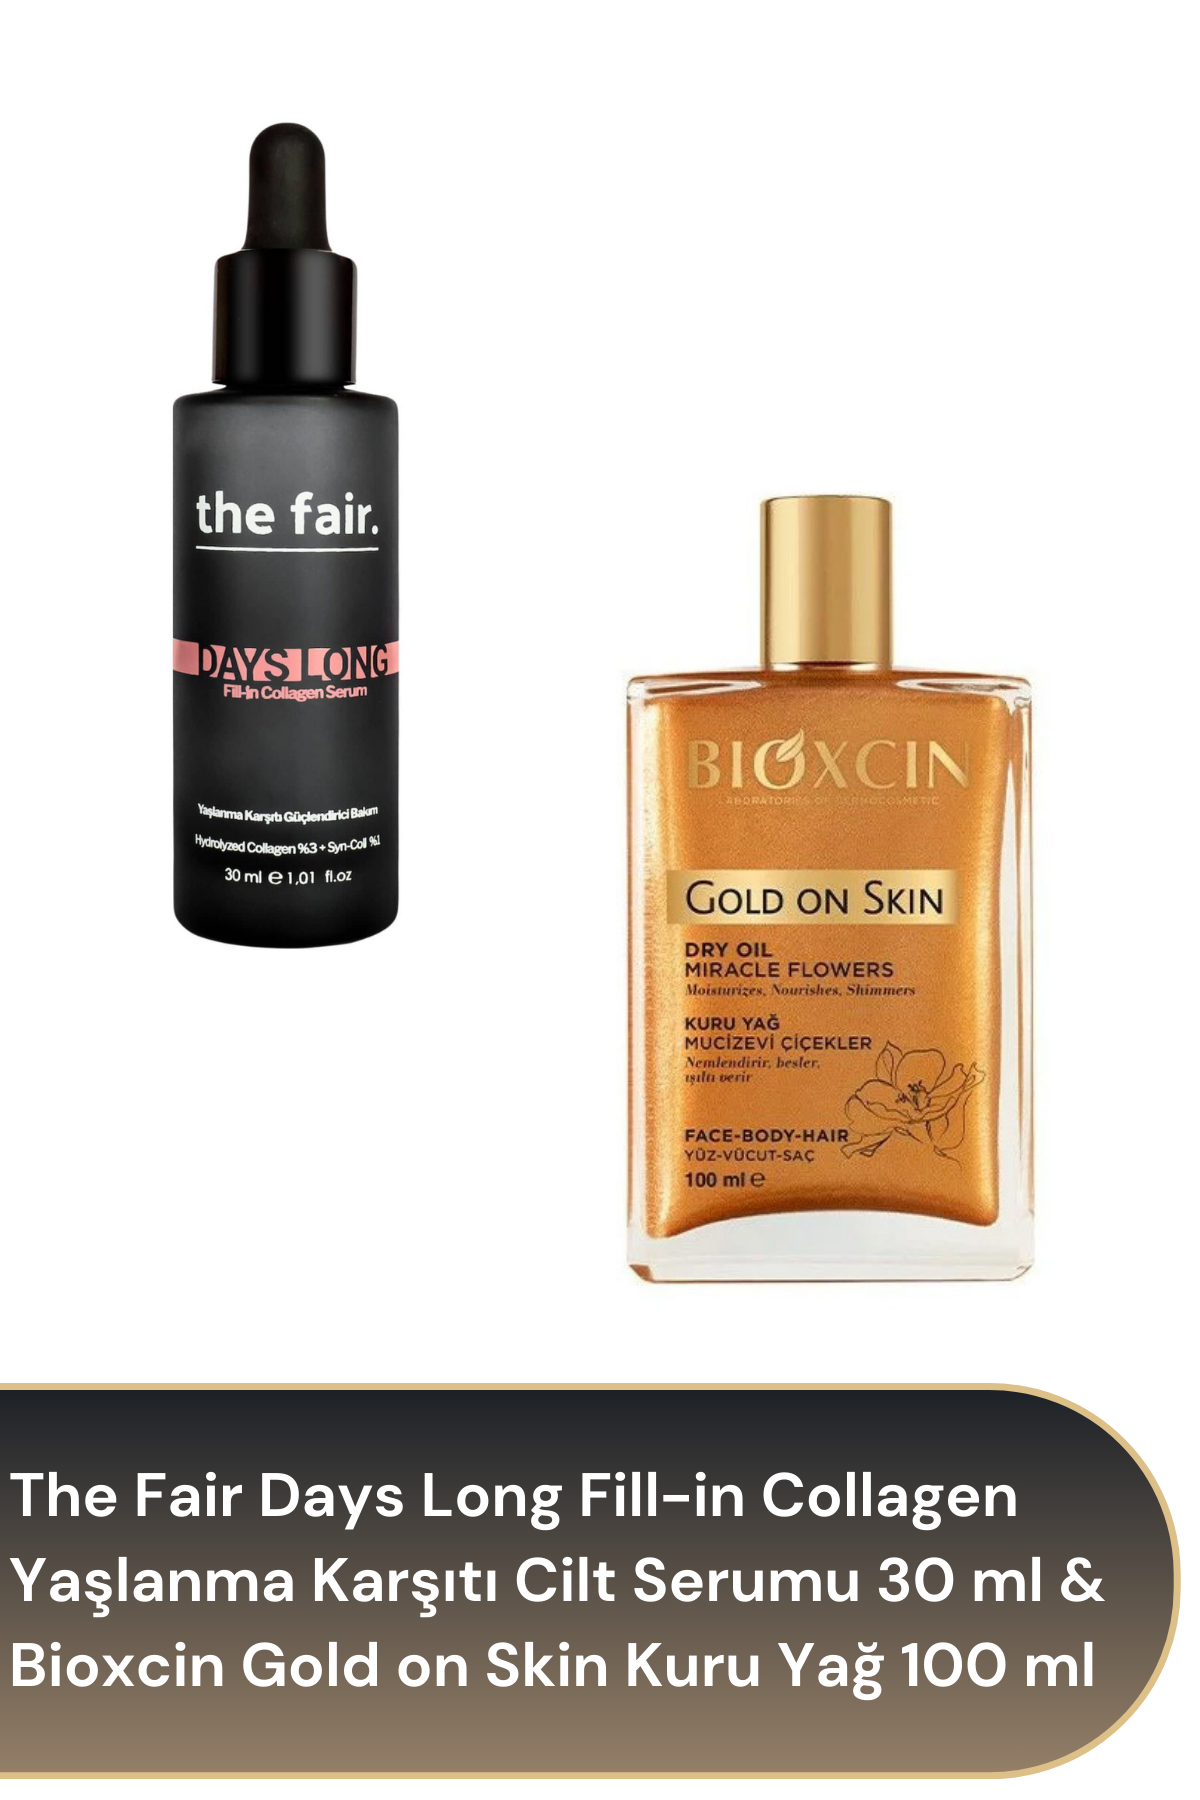 The Fair Days Long Fill-in Collagen Yaşlanma Karşıtı Cilt Serumu 30 ml & Bioxcin Gold on Skin Kuru Yağ 100 ml